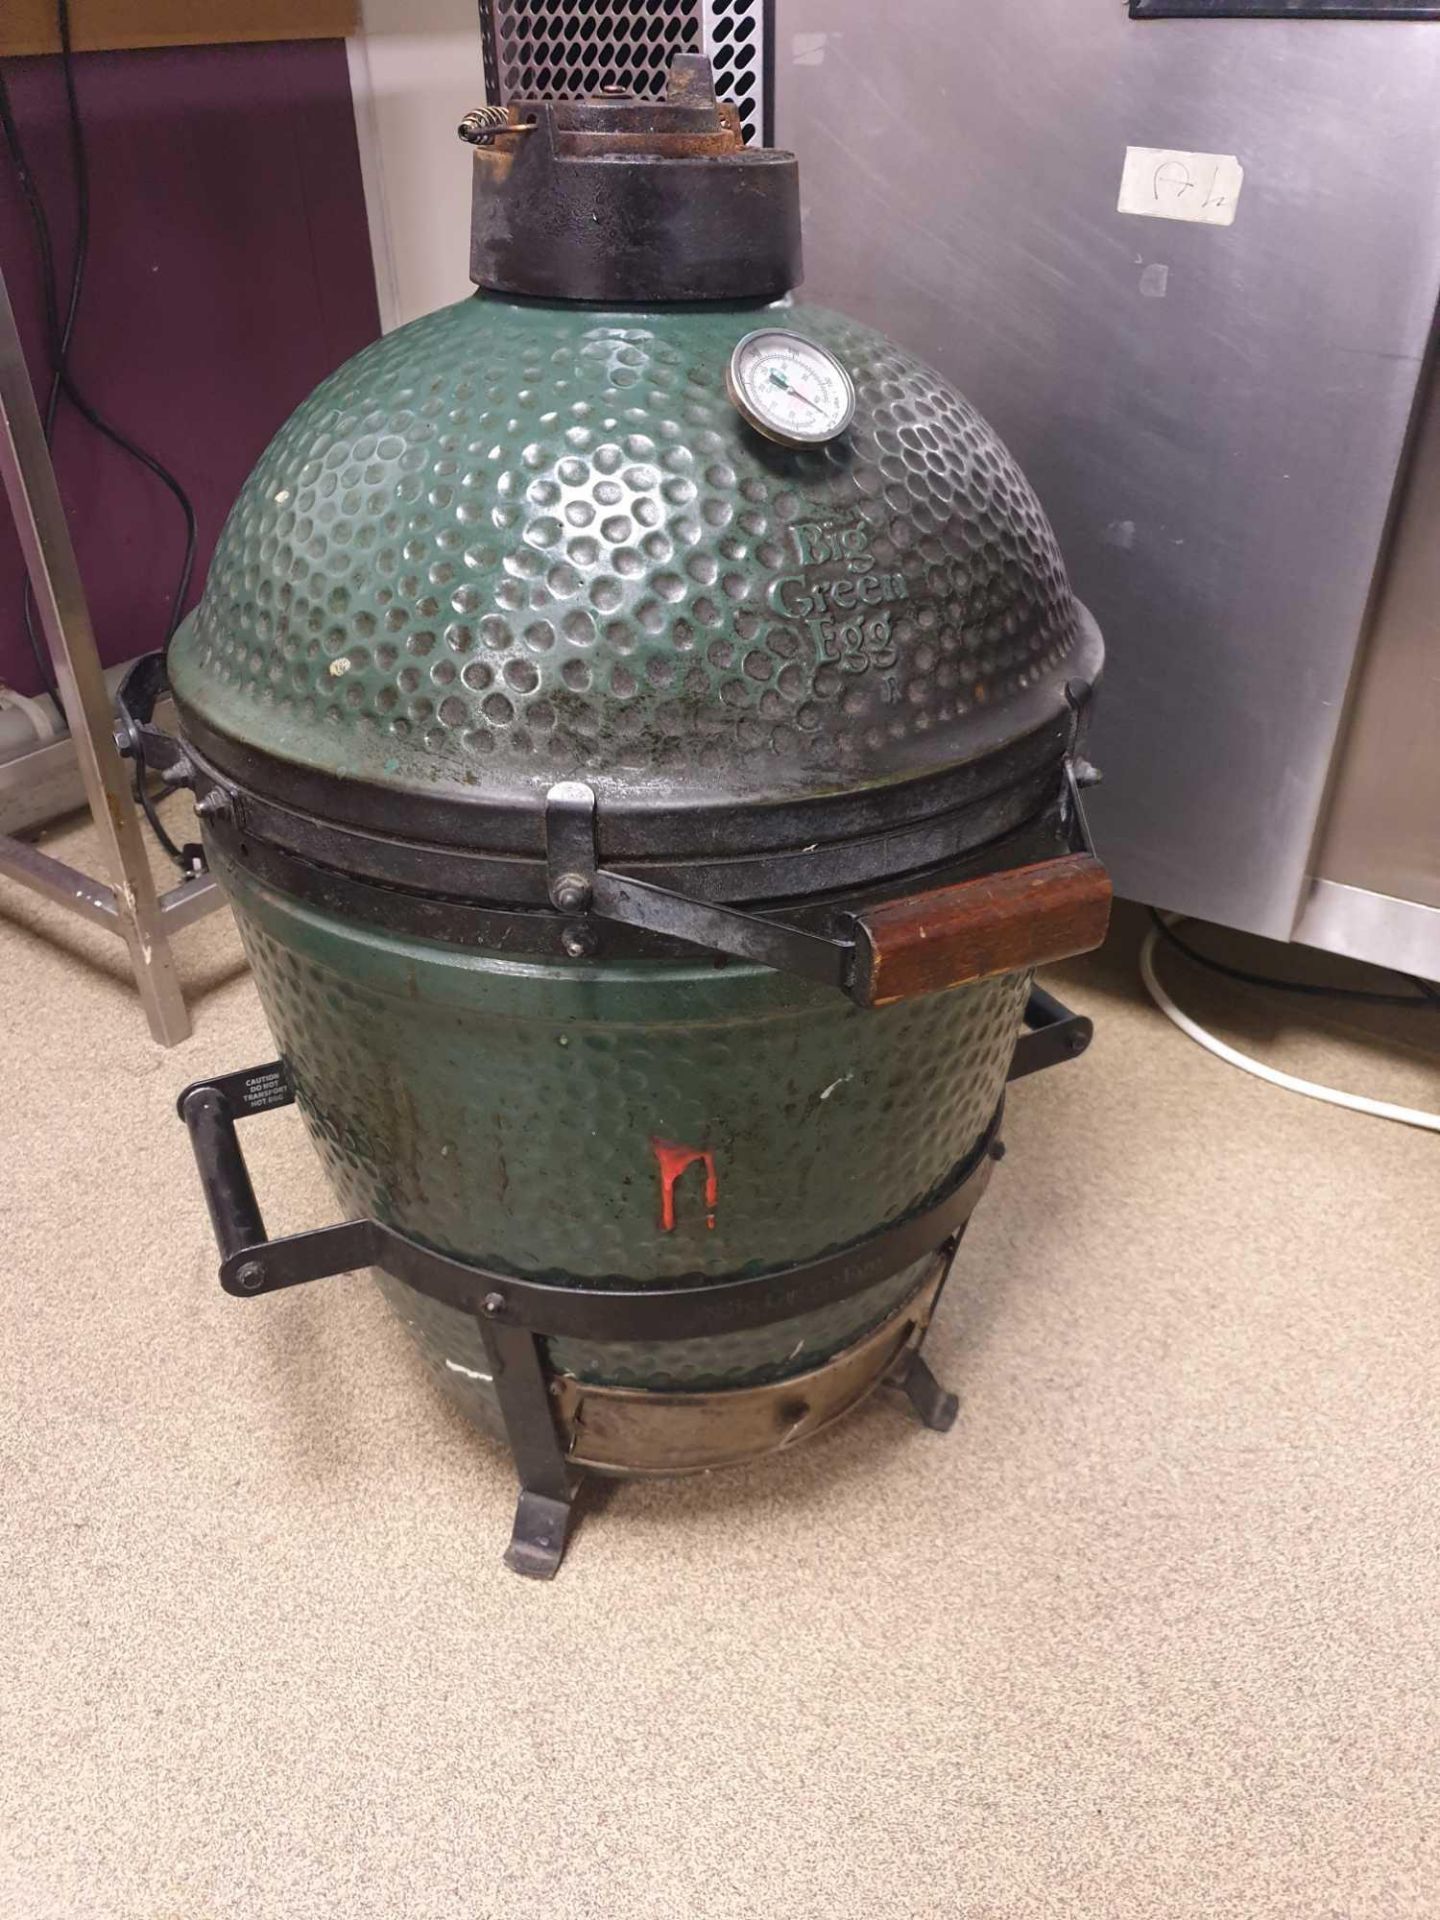 Ceramic Big Green Egg Including: Firebox Kamado Grill, Ceramic Grill, Charcoal Smoker With Egg